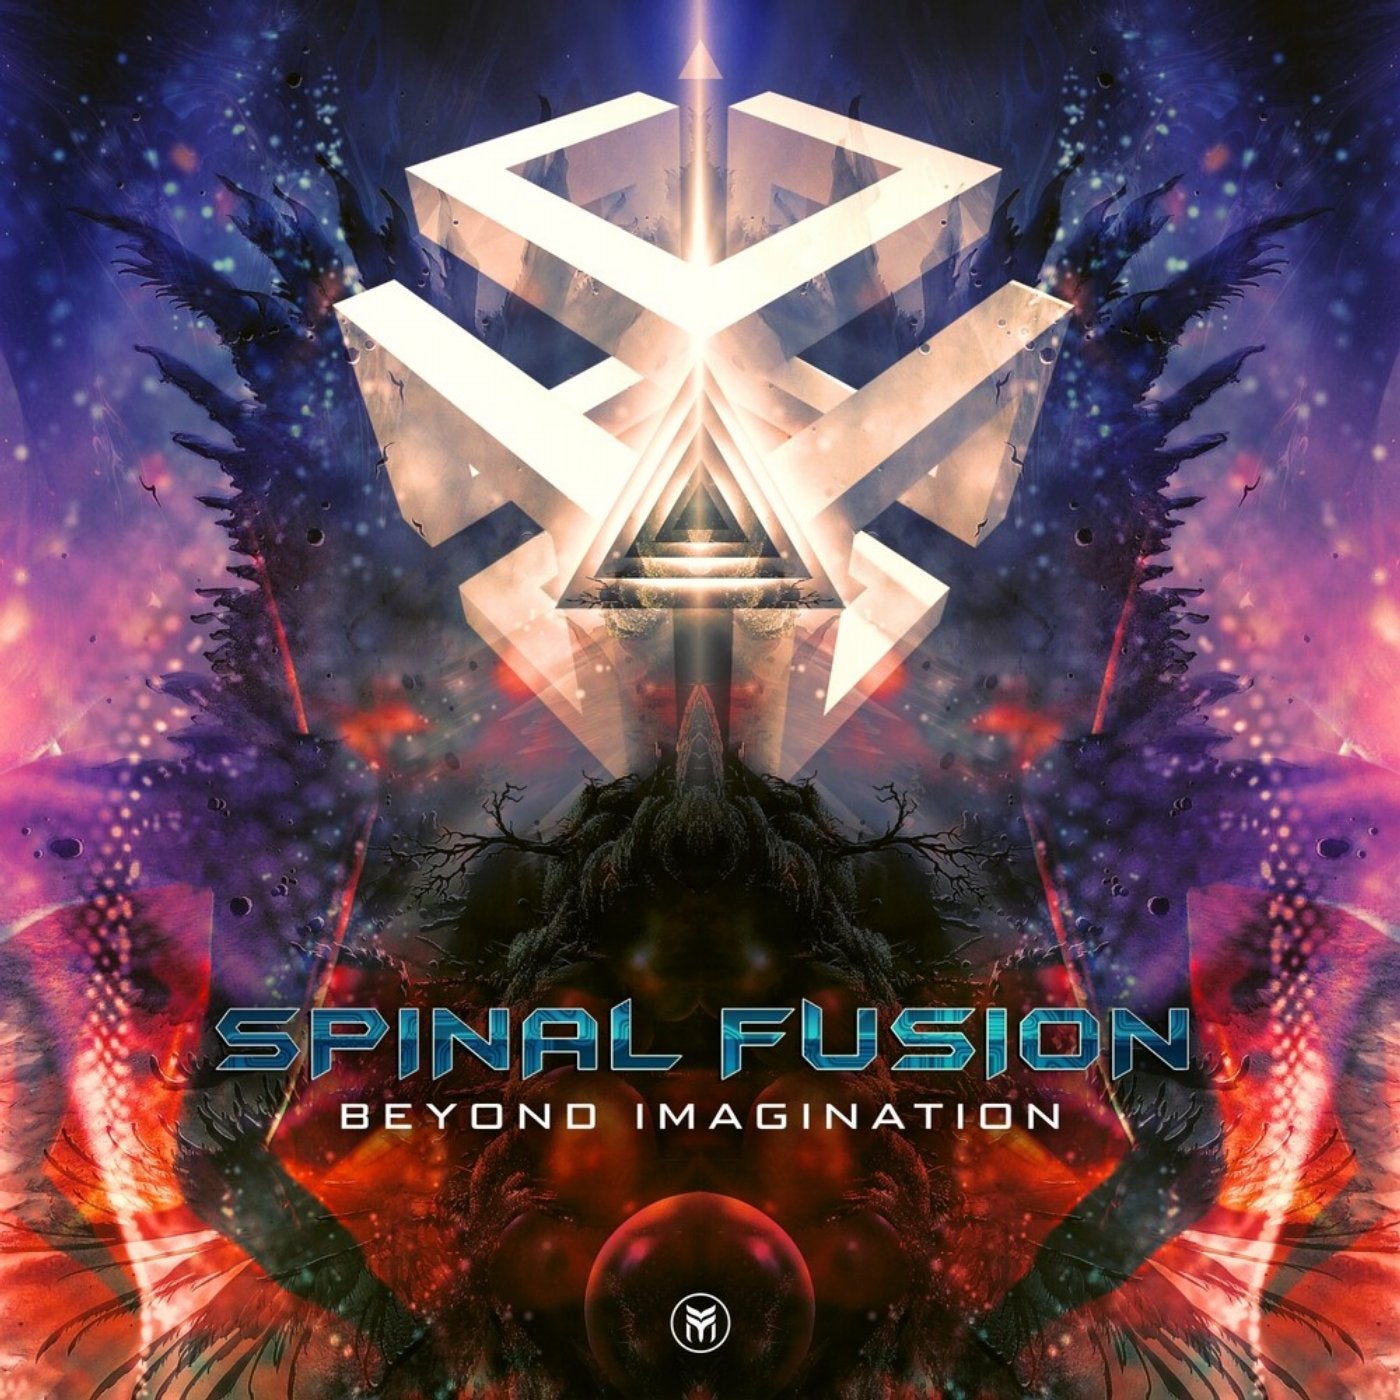 Imagine future. Beyond imagination. Slaverty - Beyond imagination (2020). Beyond imagination beomni.